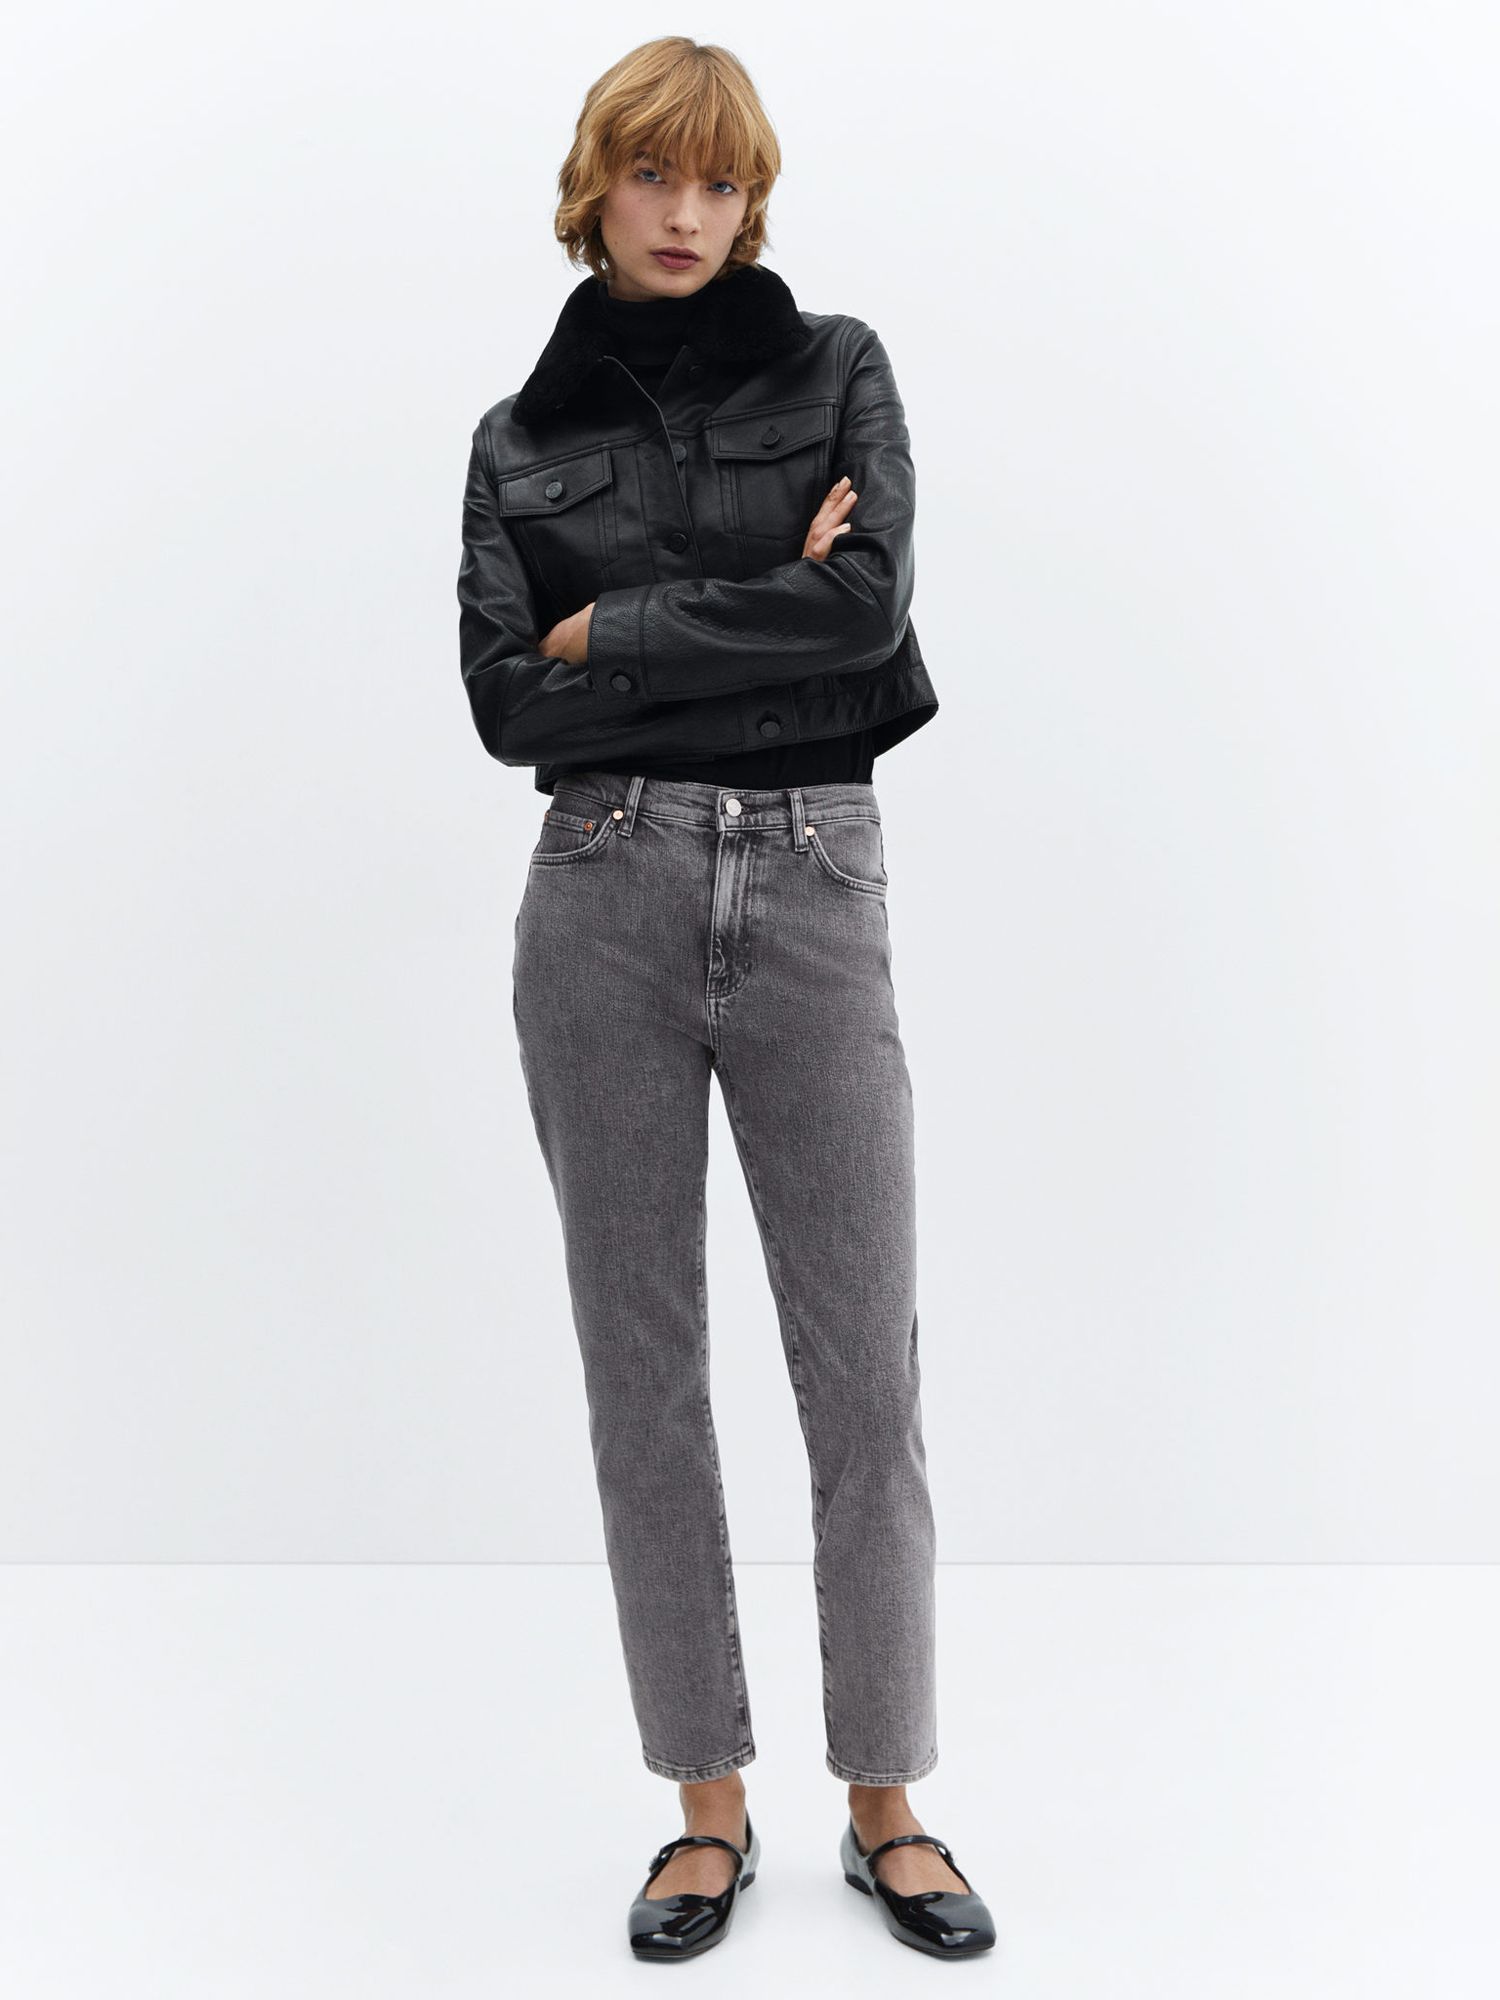 Mango Claudia Ankle Grazer Jeans, Open Grey at John Lewis & Partners